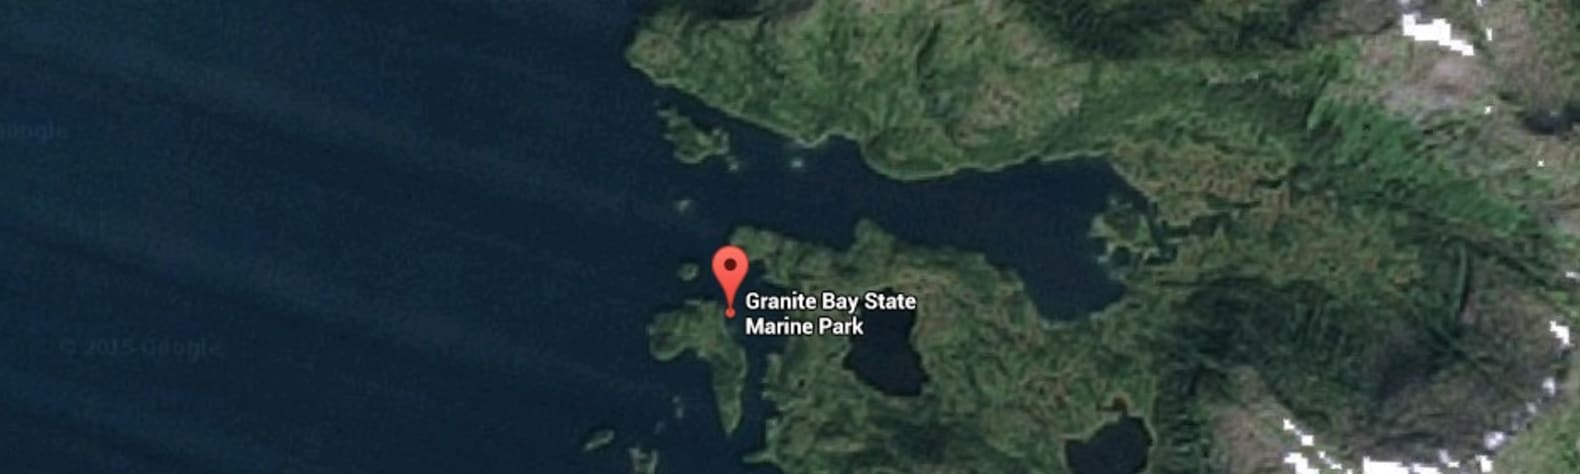 Granite Bay State Marine Park